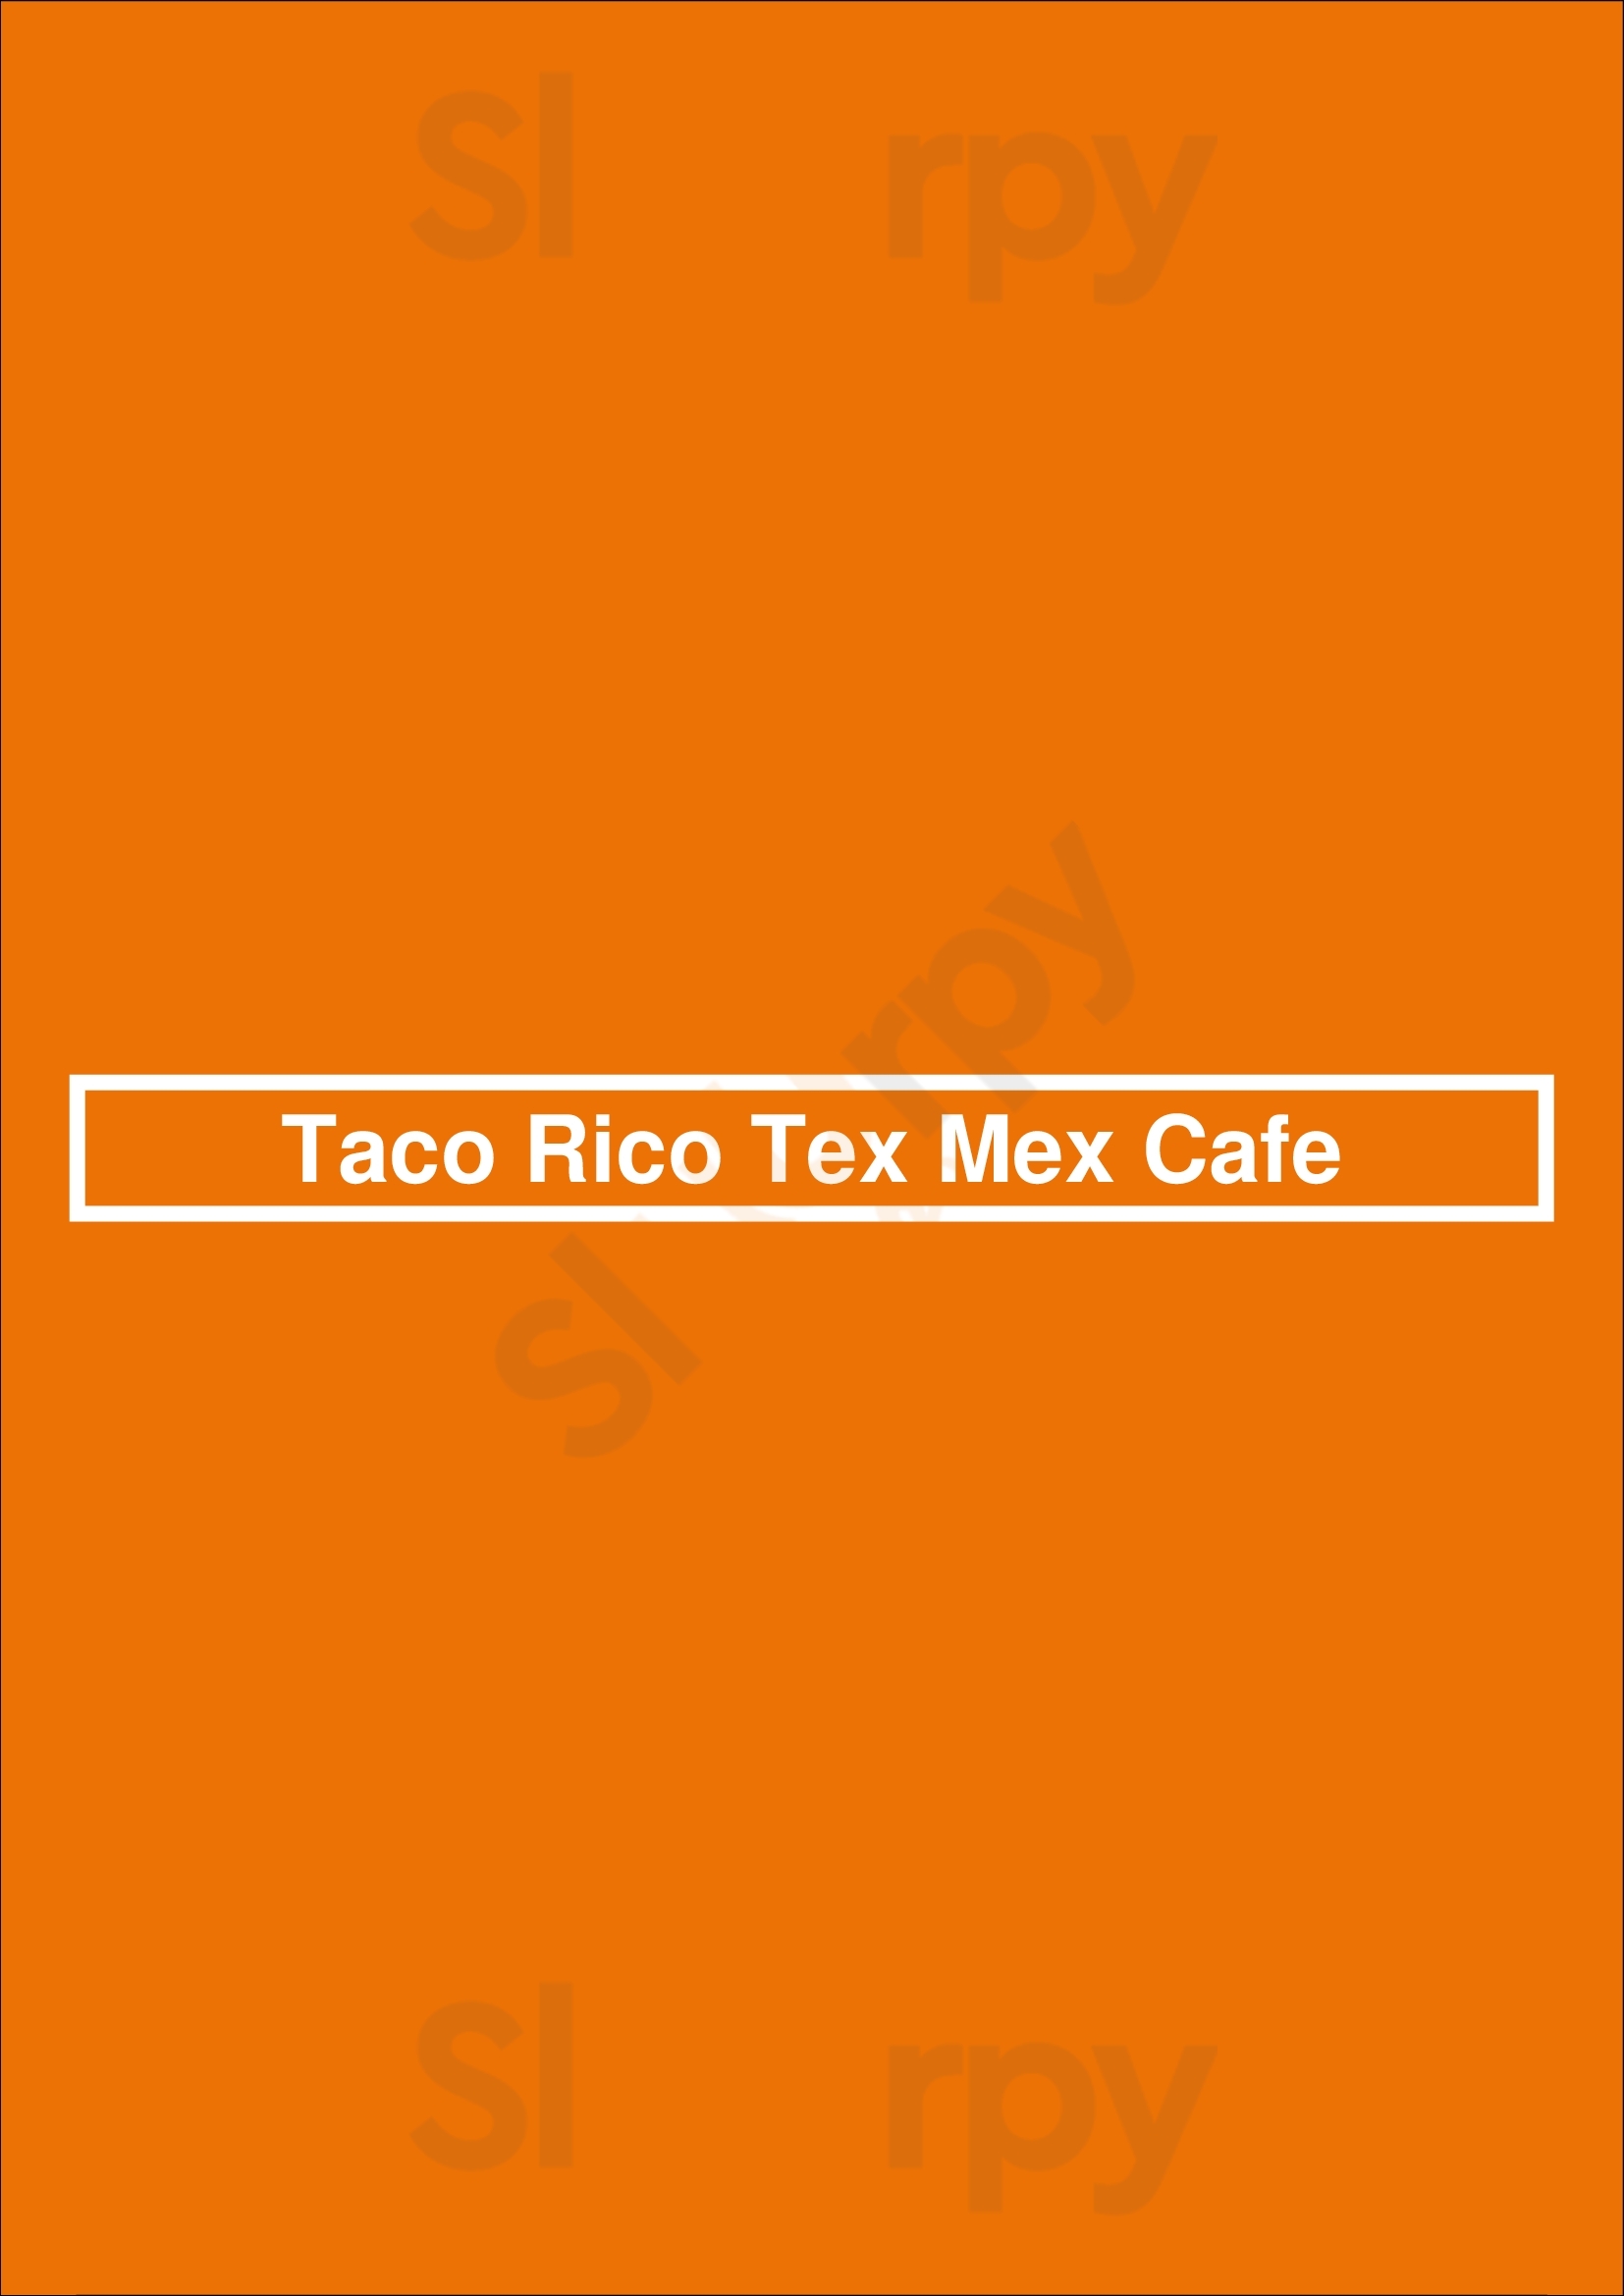 Taco Rico Tex Mex Cafe Miami Menu - 1